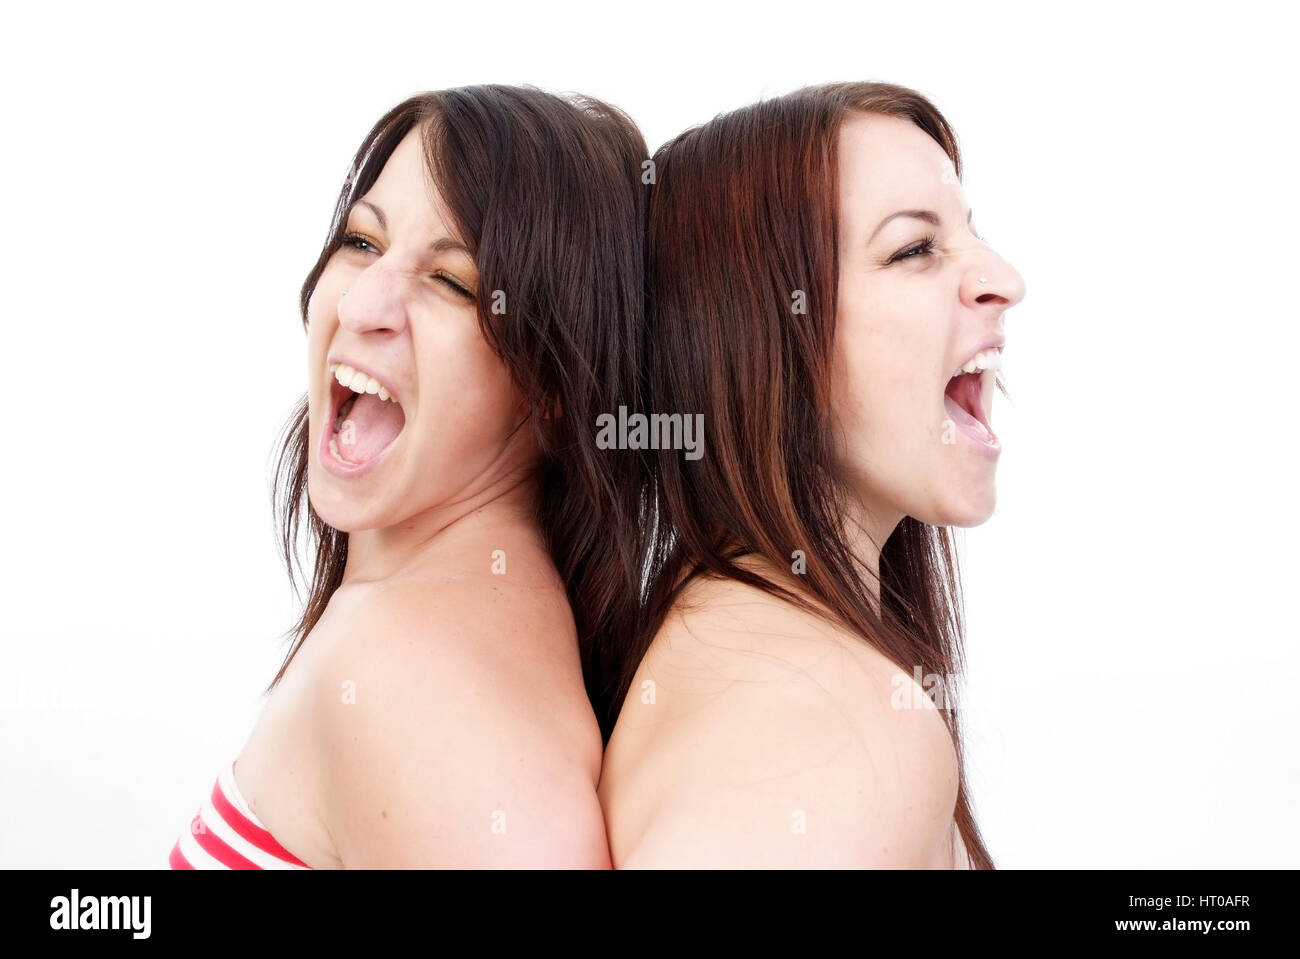 Zwillinge schreien - twins screaming Stock Photo